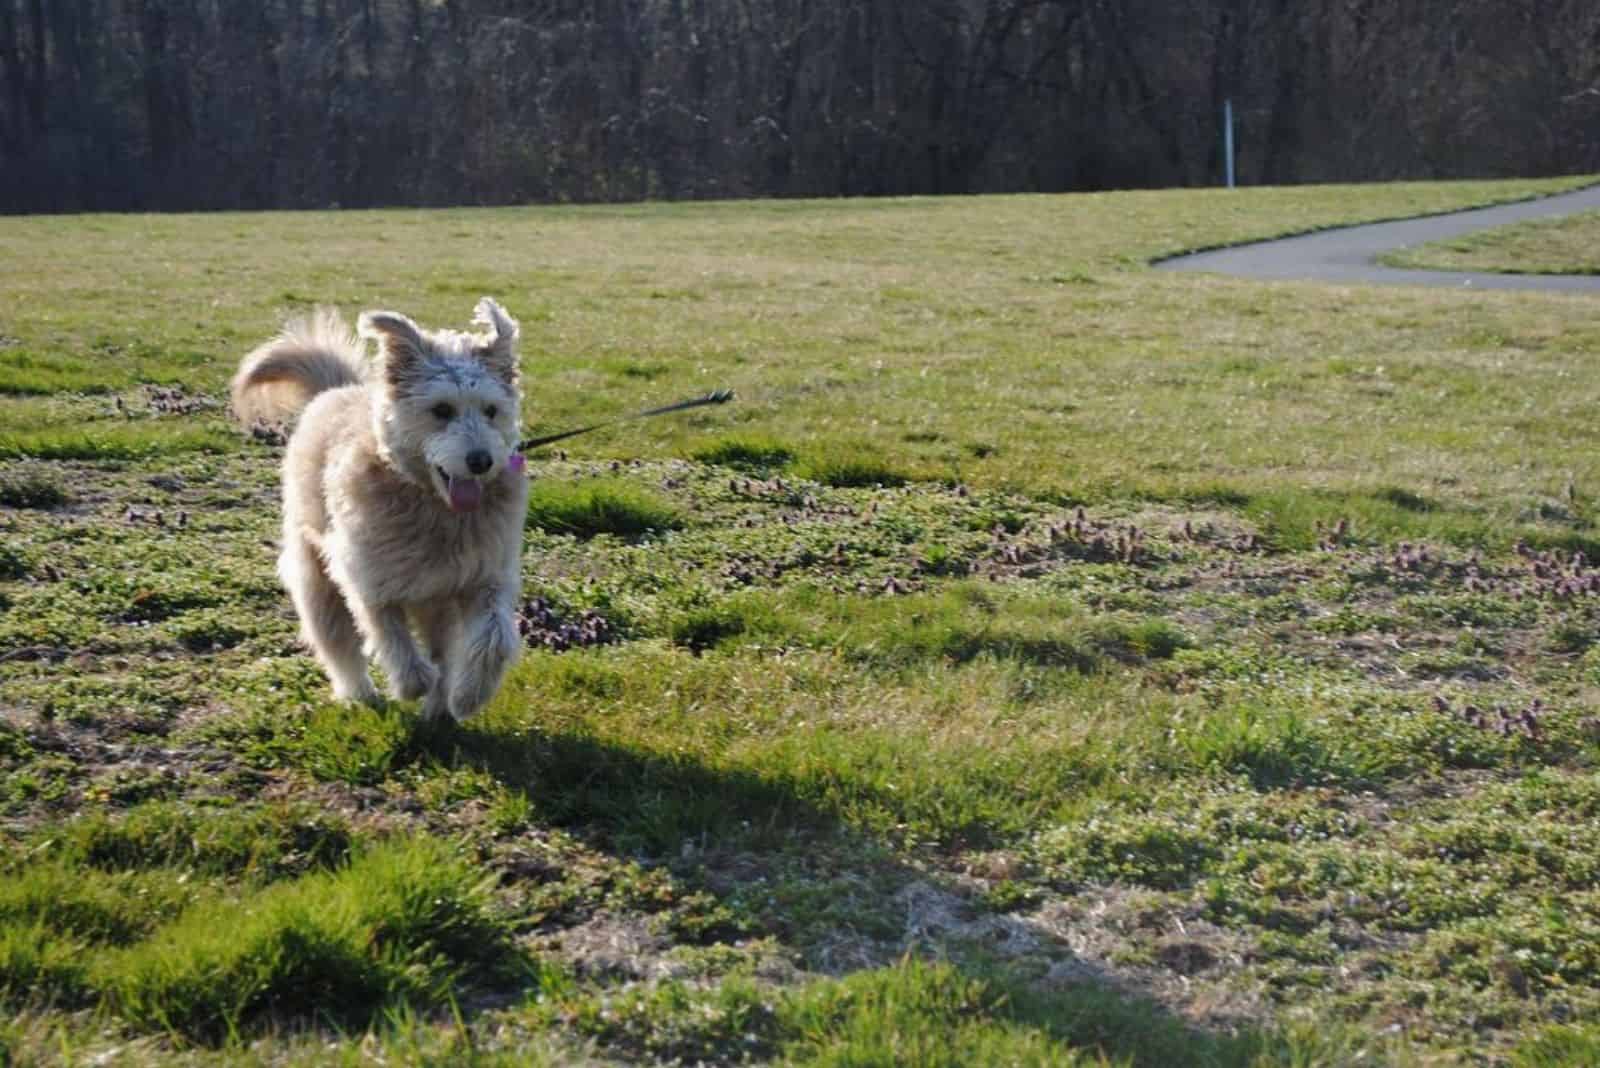 a beautiful crossbreed dog runs across the field